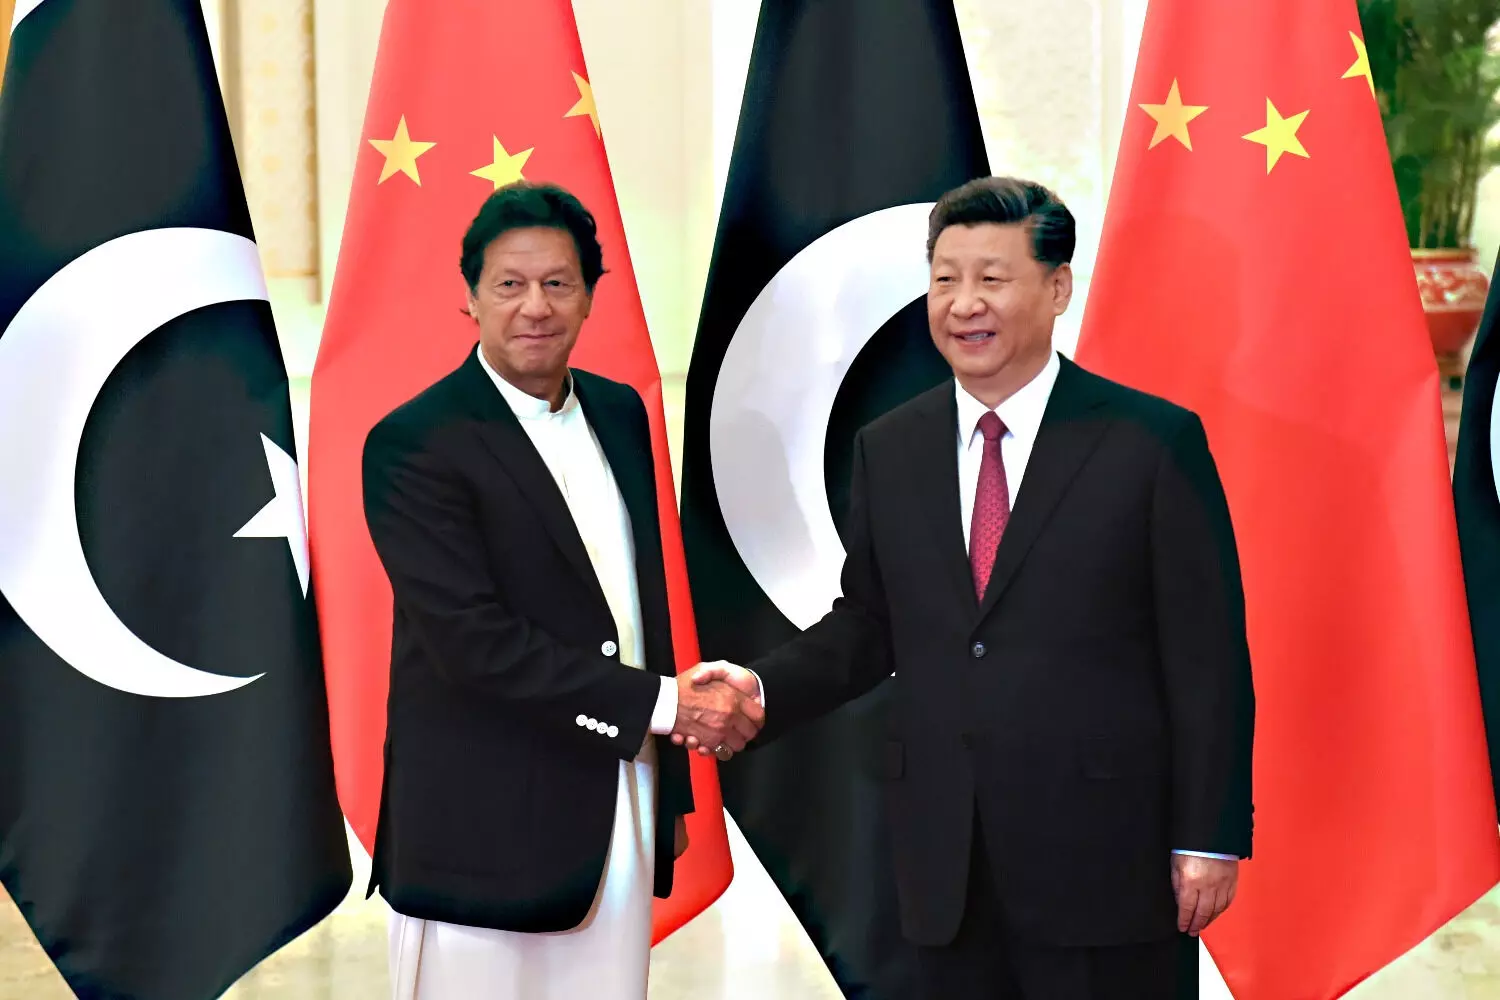 No Western power could damage Paks ties with China: Imran Khan